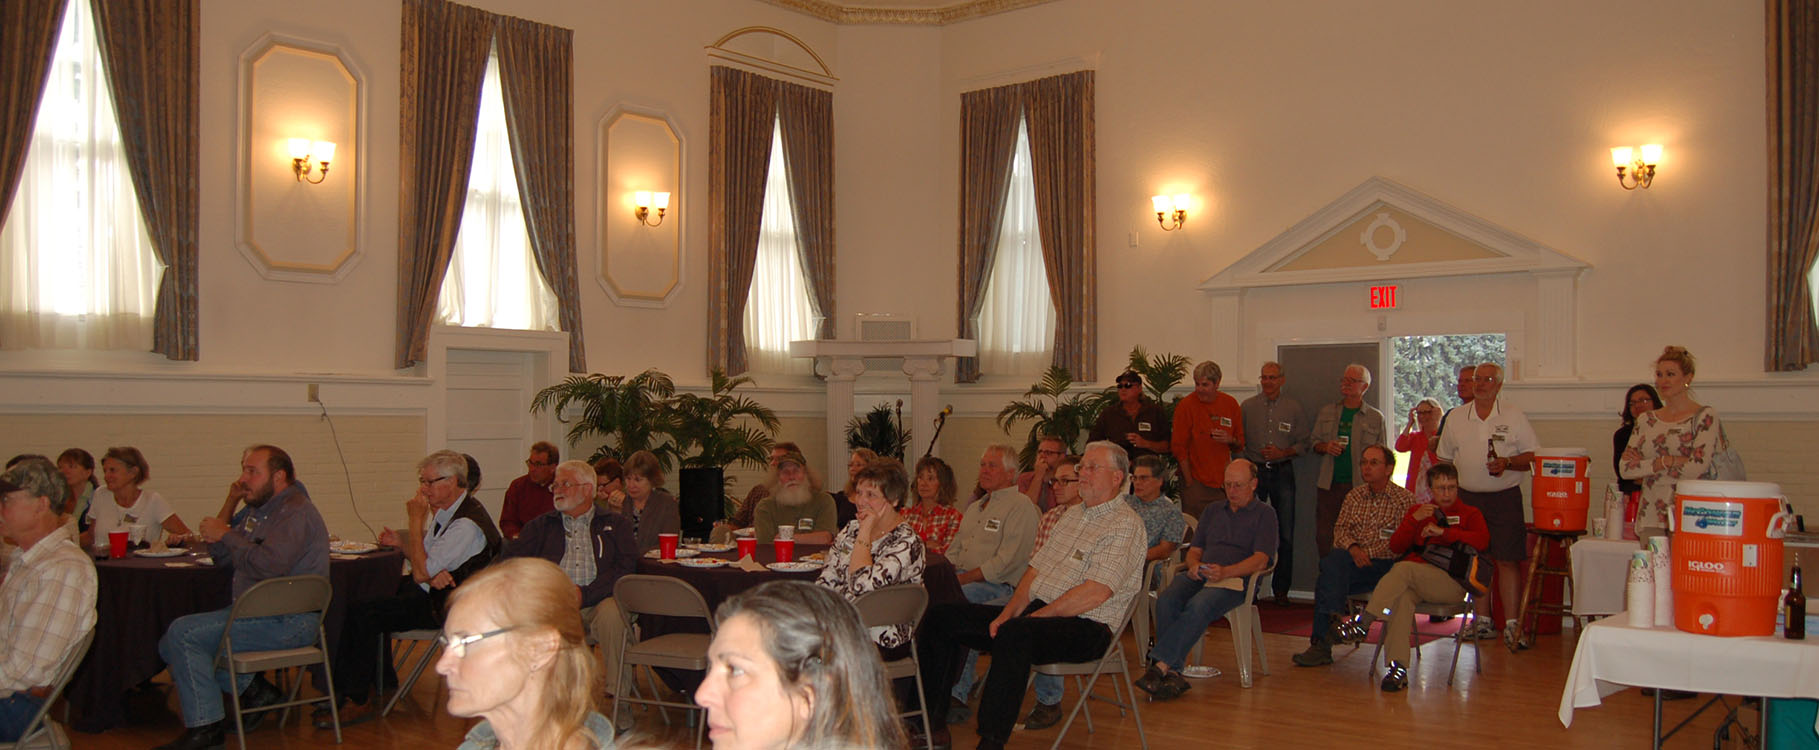 Crowd shot of Vital Ground's 25th anniversary celebration at Heritage Hall, Fort Missoula